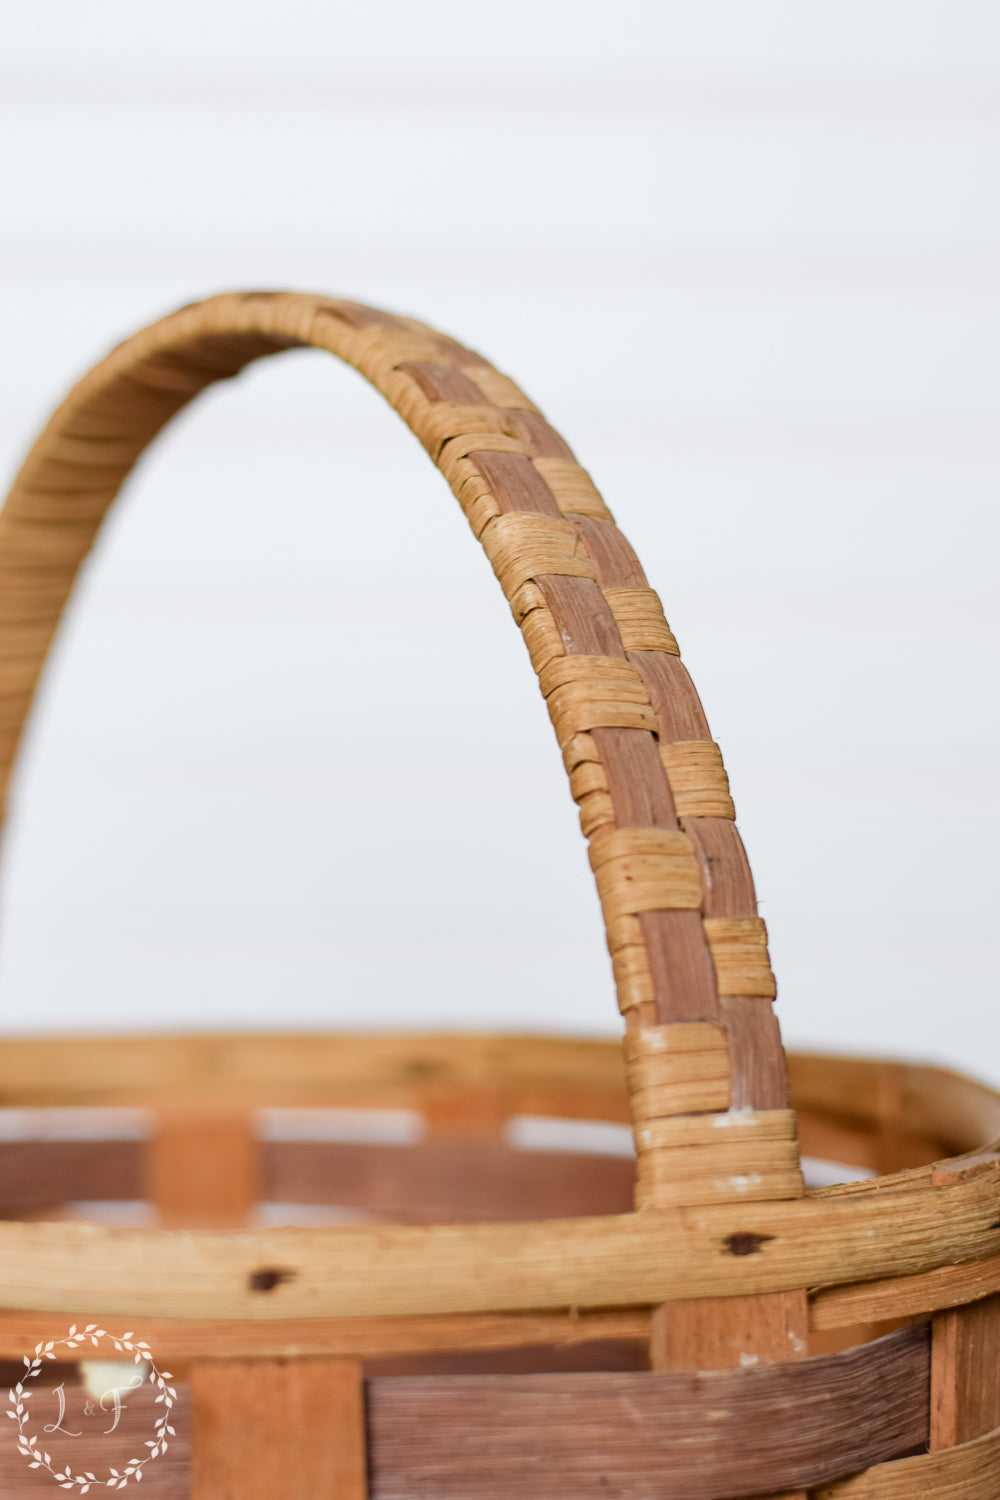 Round Handmade Basket